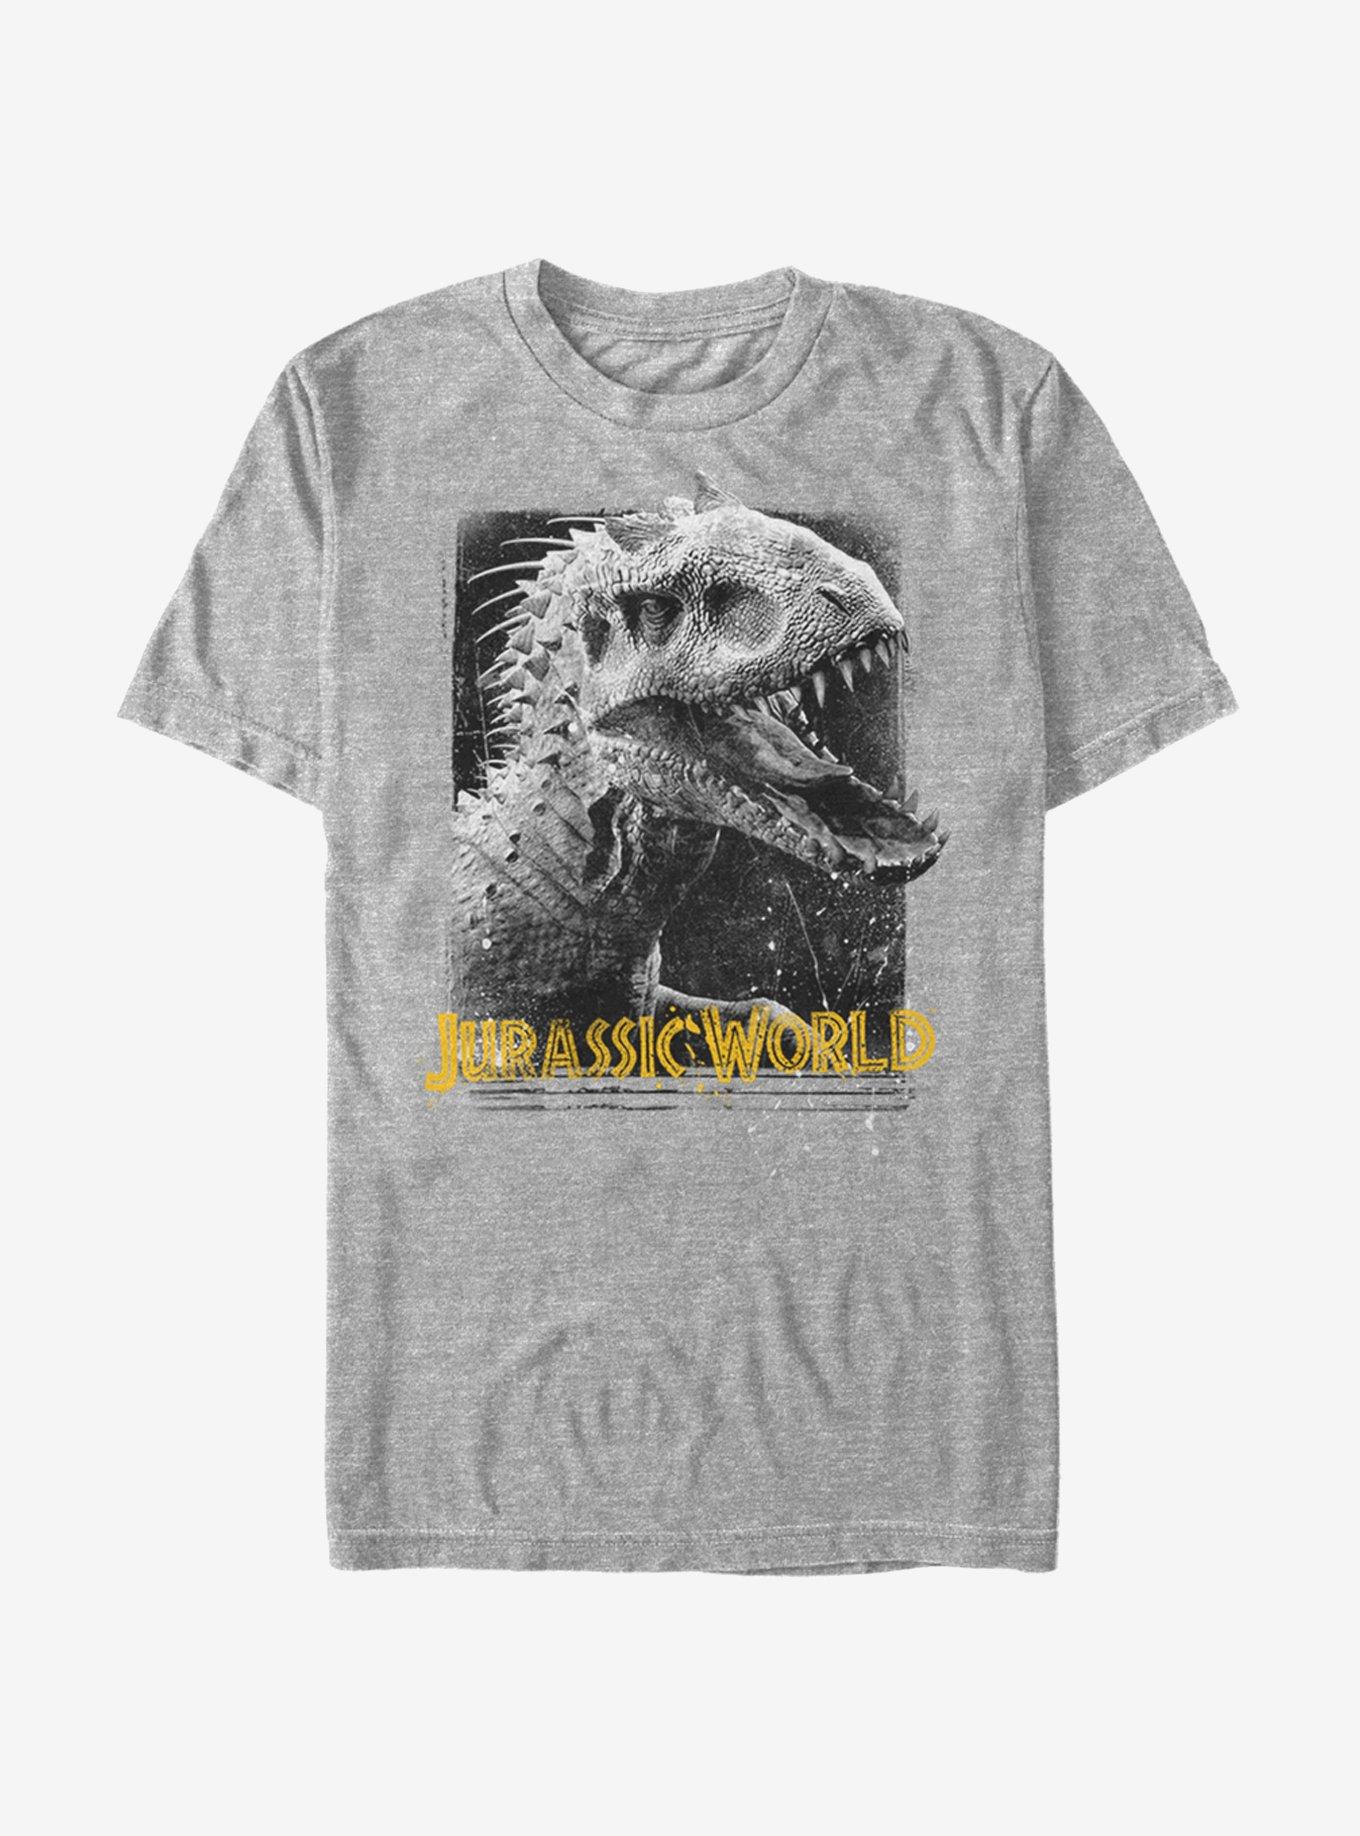 Hot Topic Jurassic World Indominus Rex T-Shirt | CoolSprings Galleria